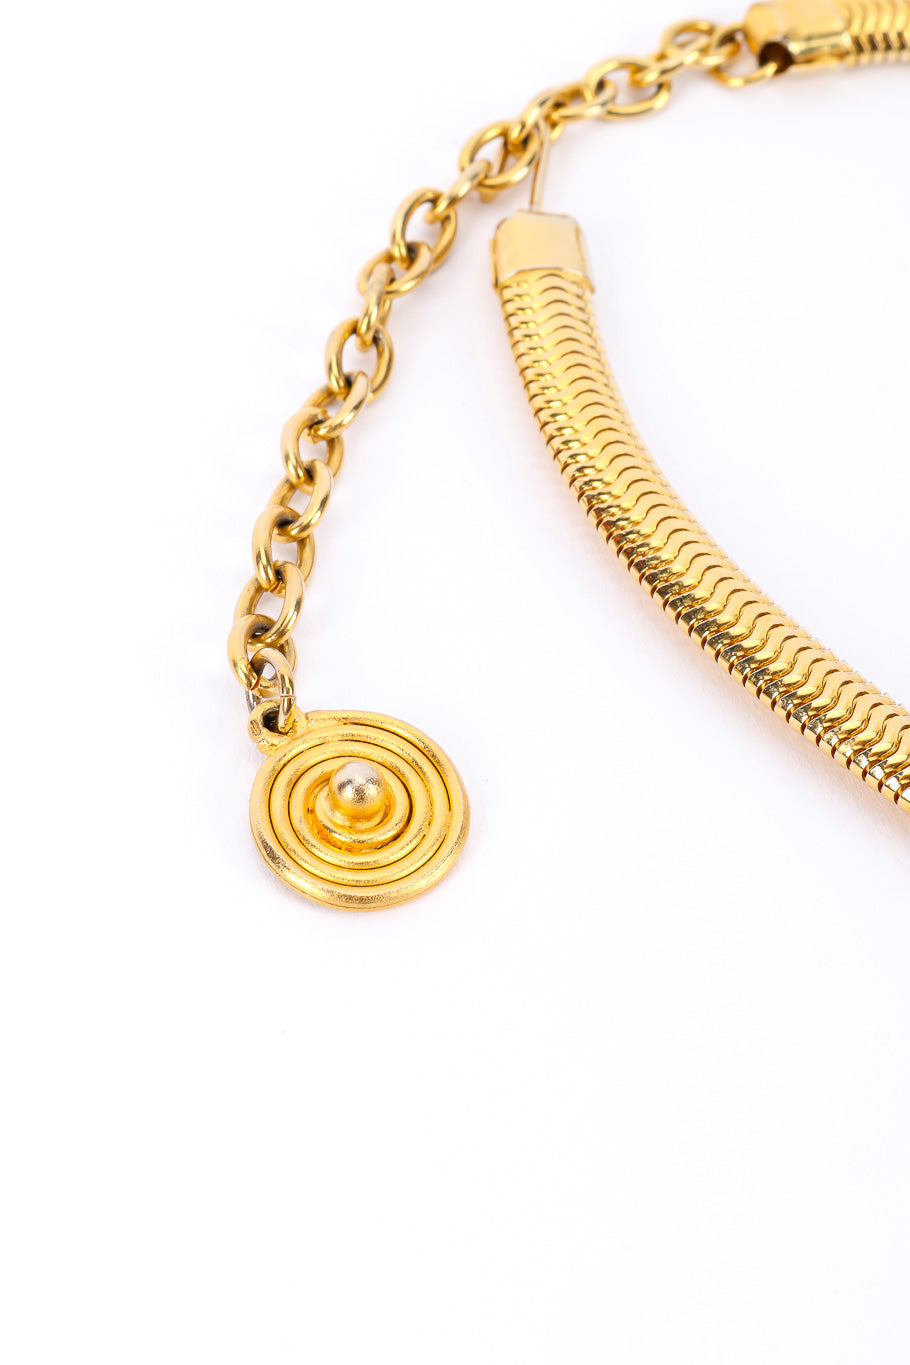 Vintage Swirl Motif Collar Necklace extender chain pendant closeup @Recessla